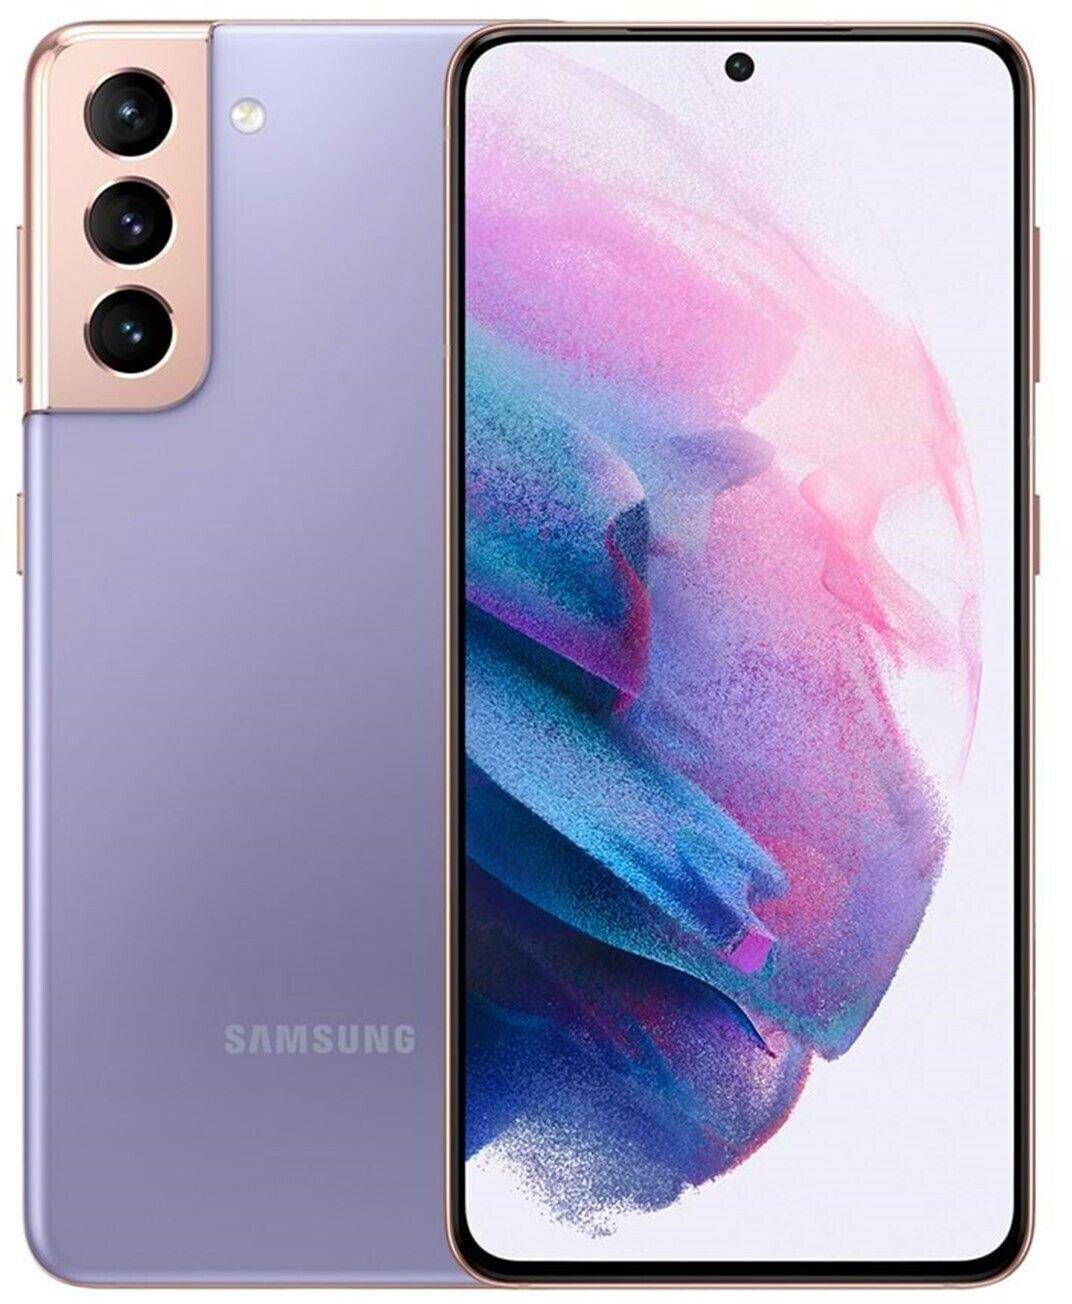 SAMSUNG  Refurbished Galaxy S21 5G (dual sim) 256 GB - Sehr guter Zustand 